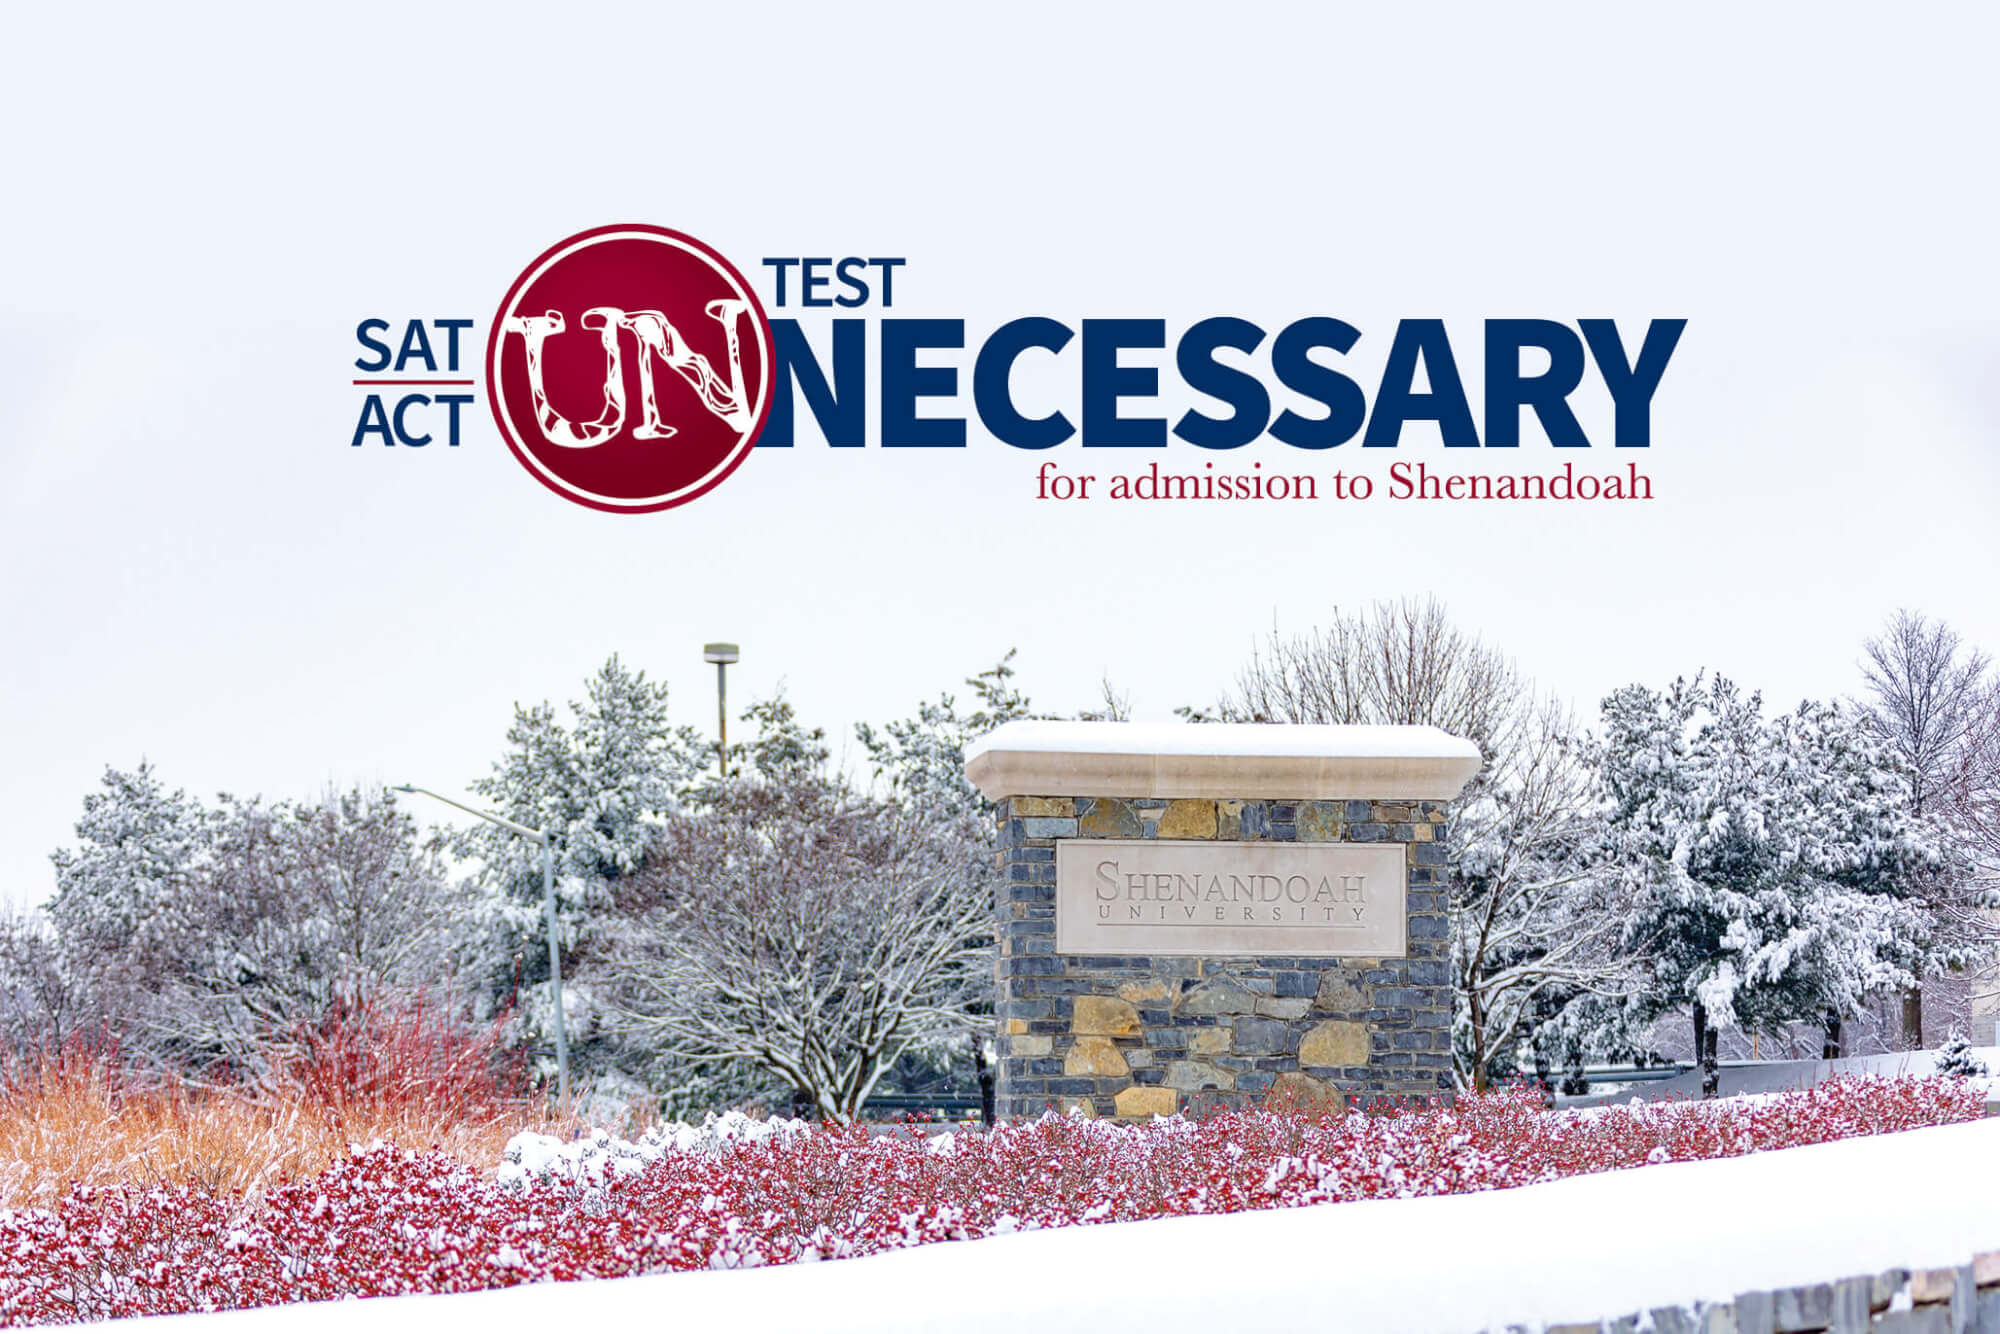 Shenandoah University is test-unnecessary Not having test scores is not a disadvantage